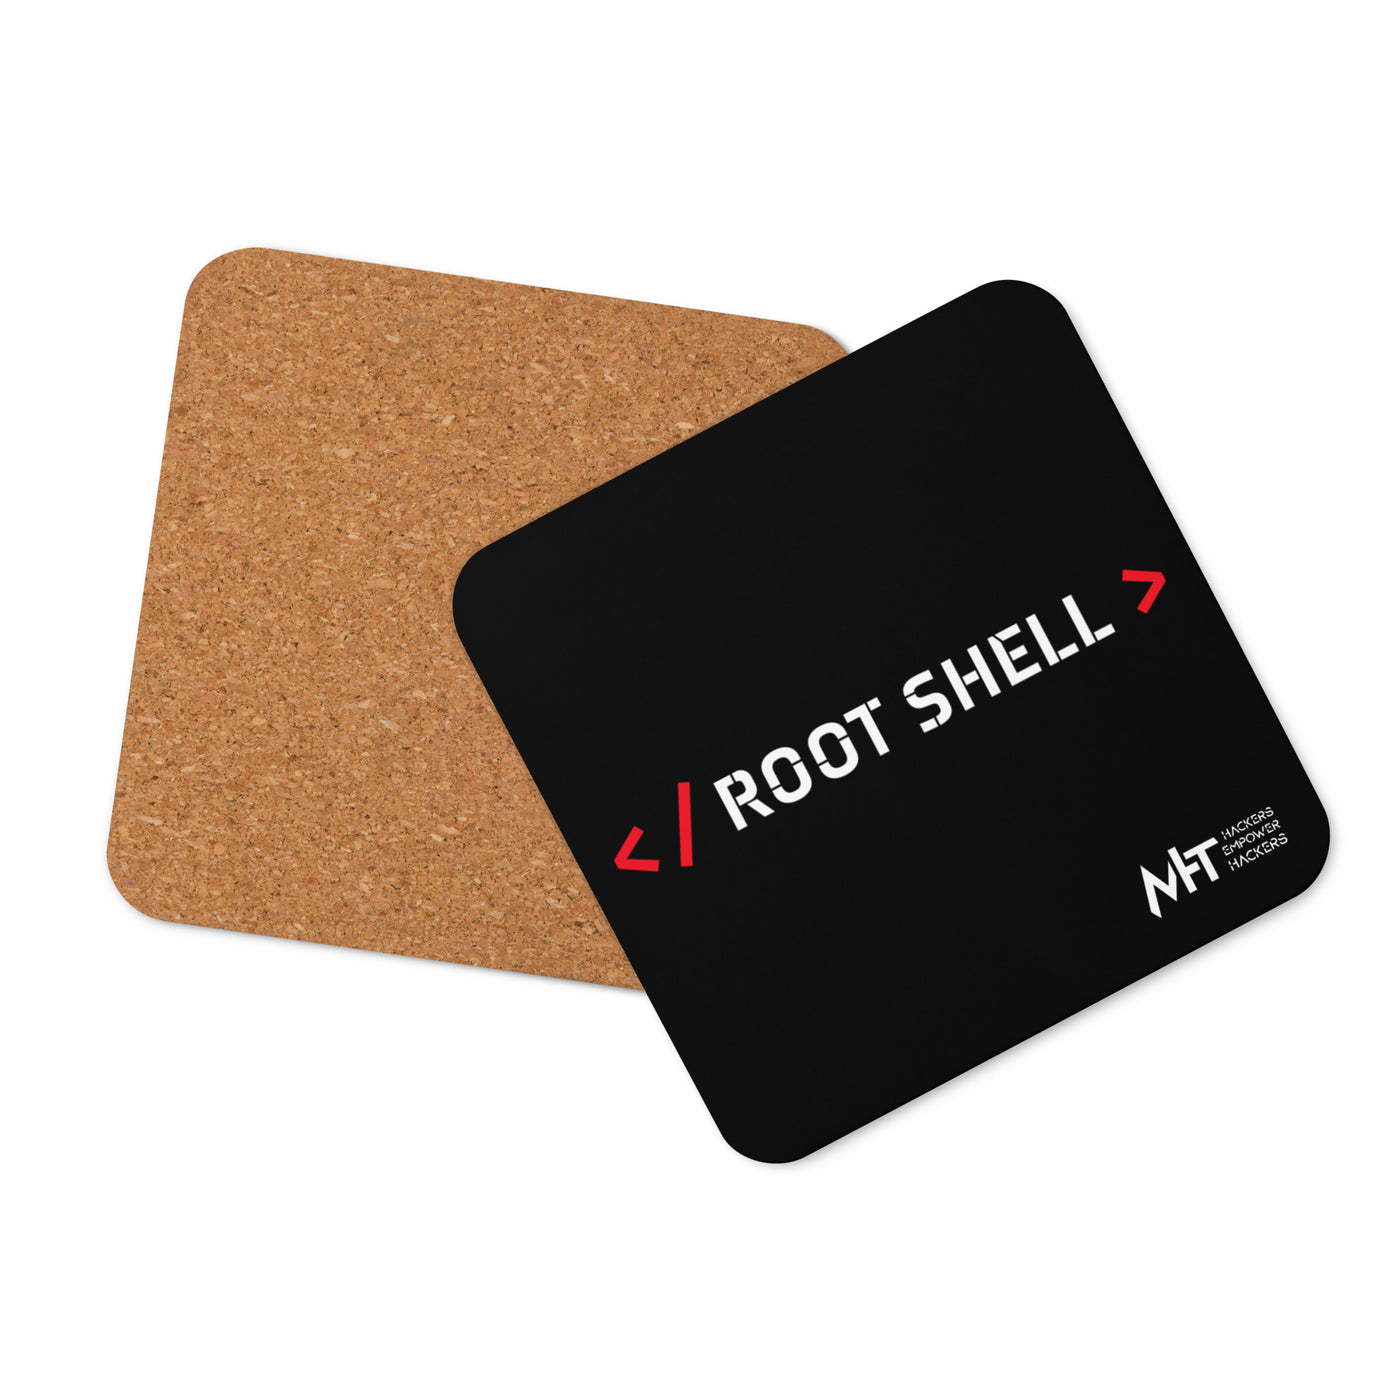 Root shell - Cork-back coaster